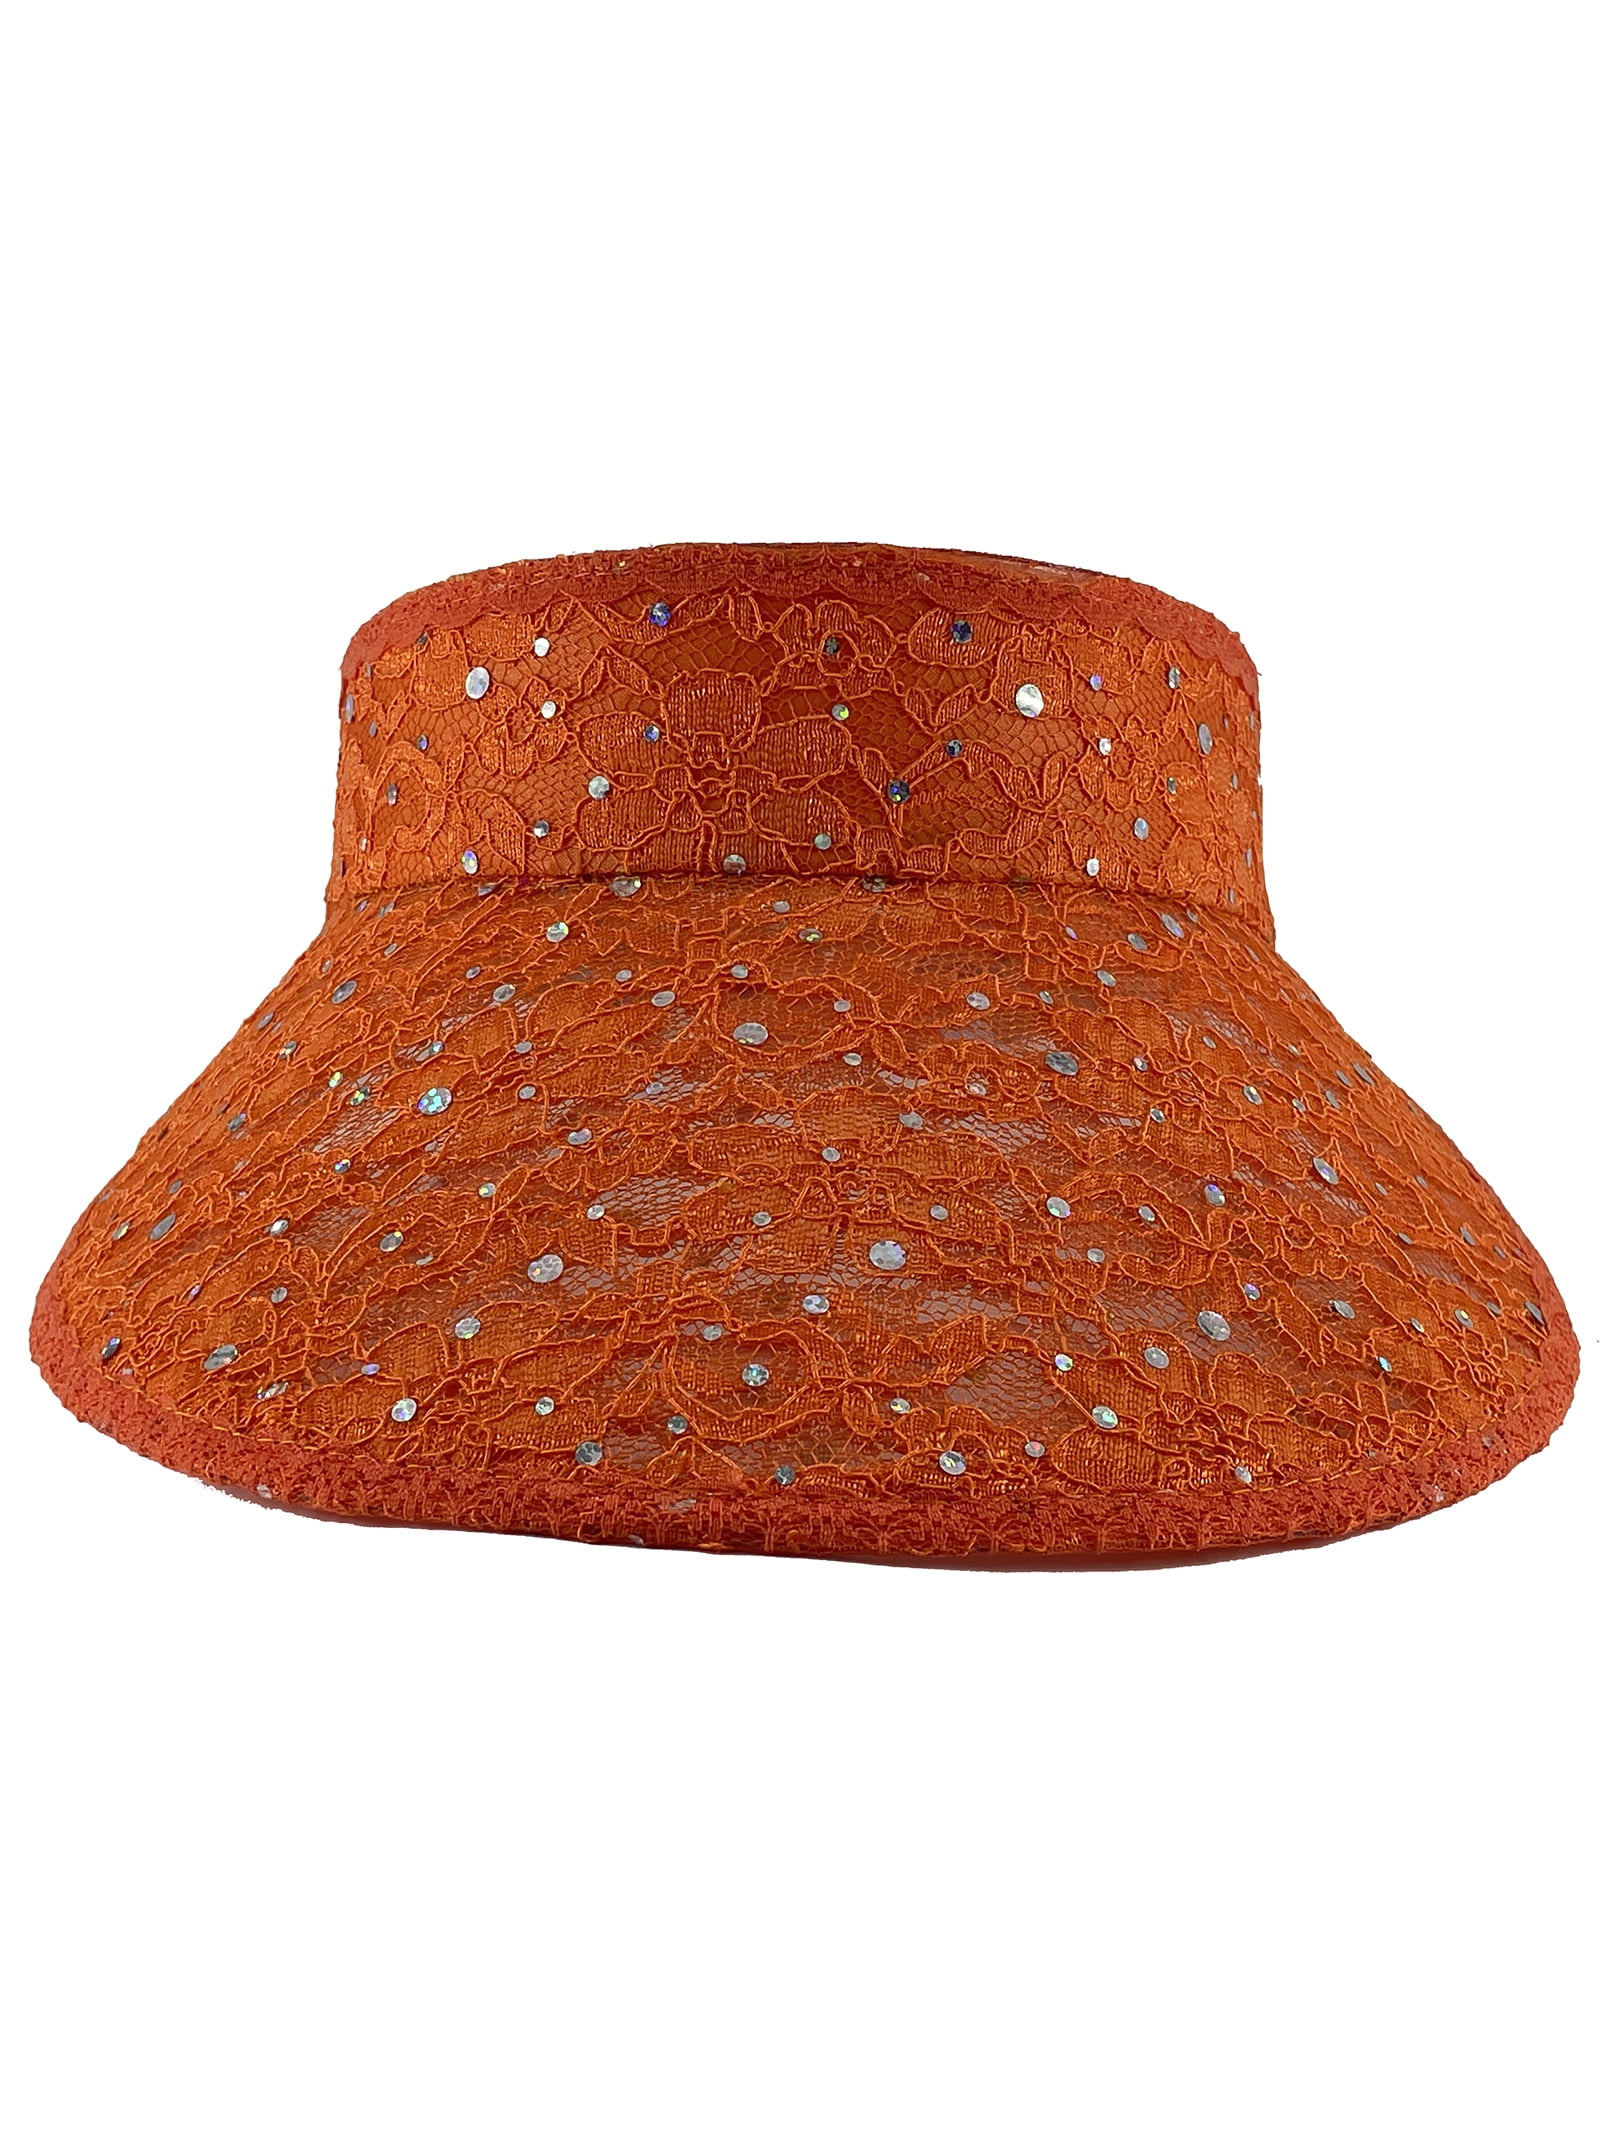 Cowboy Sun Hat in Linen with Louis Vuitton Ribbon